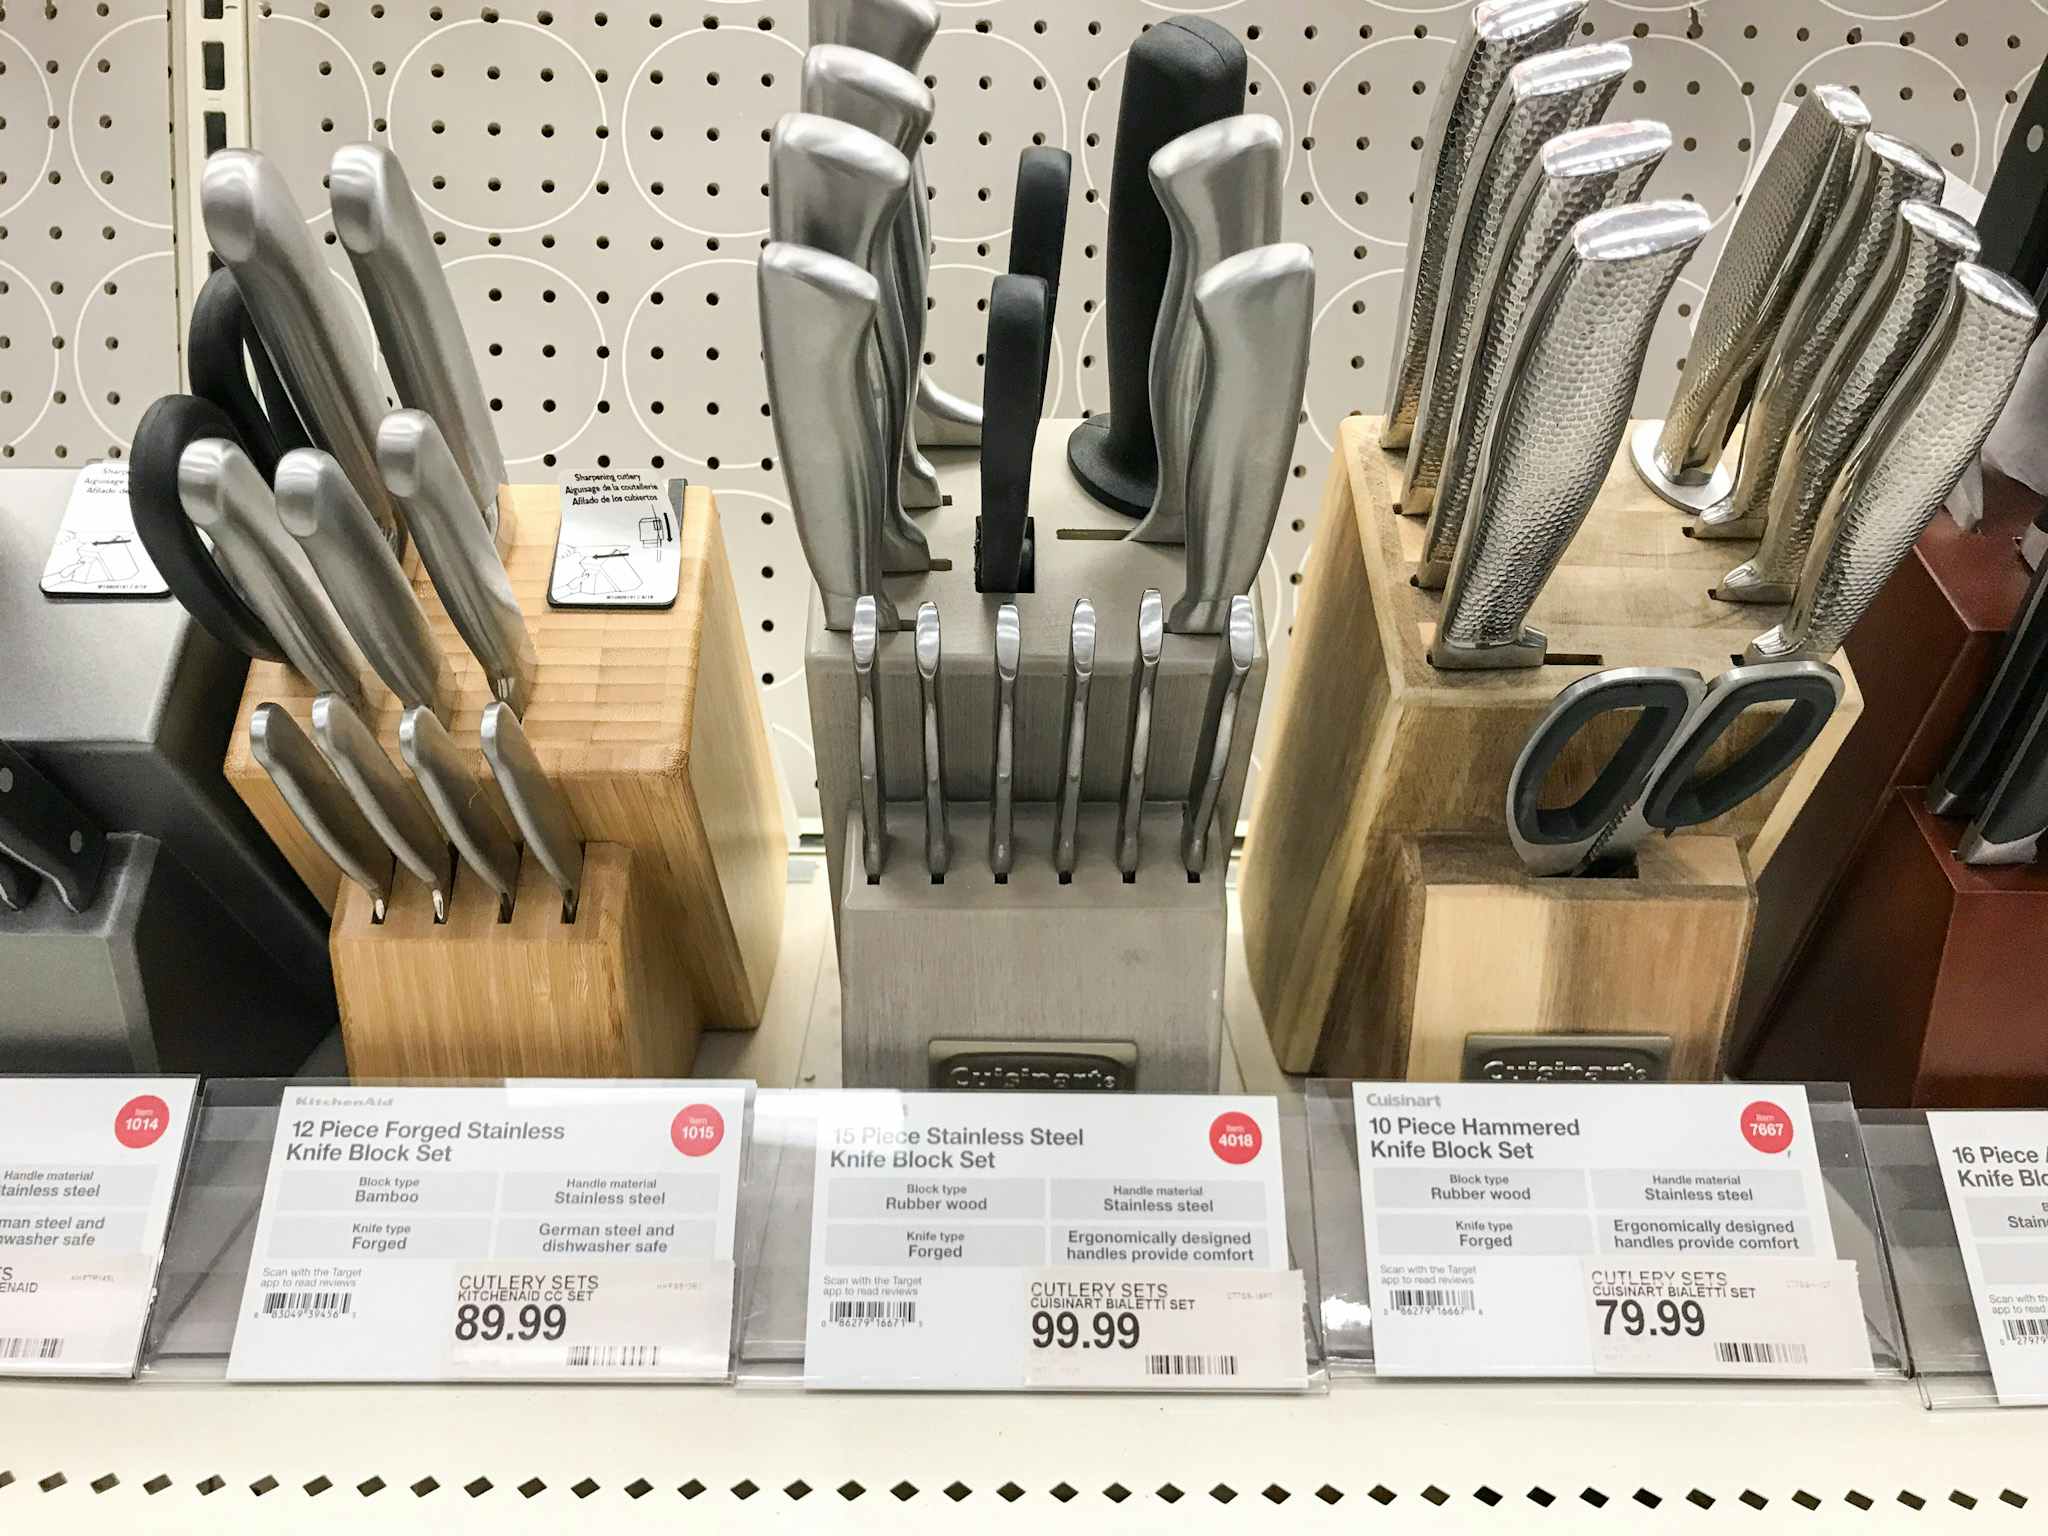 cuisinart stainless steel knife block set at target